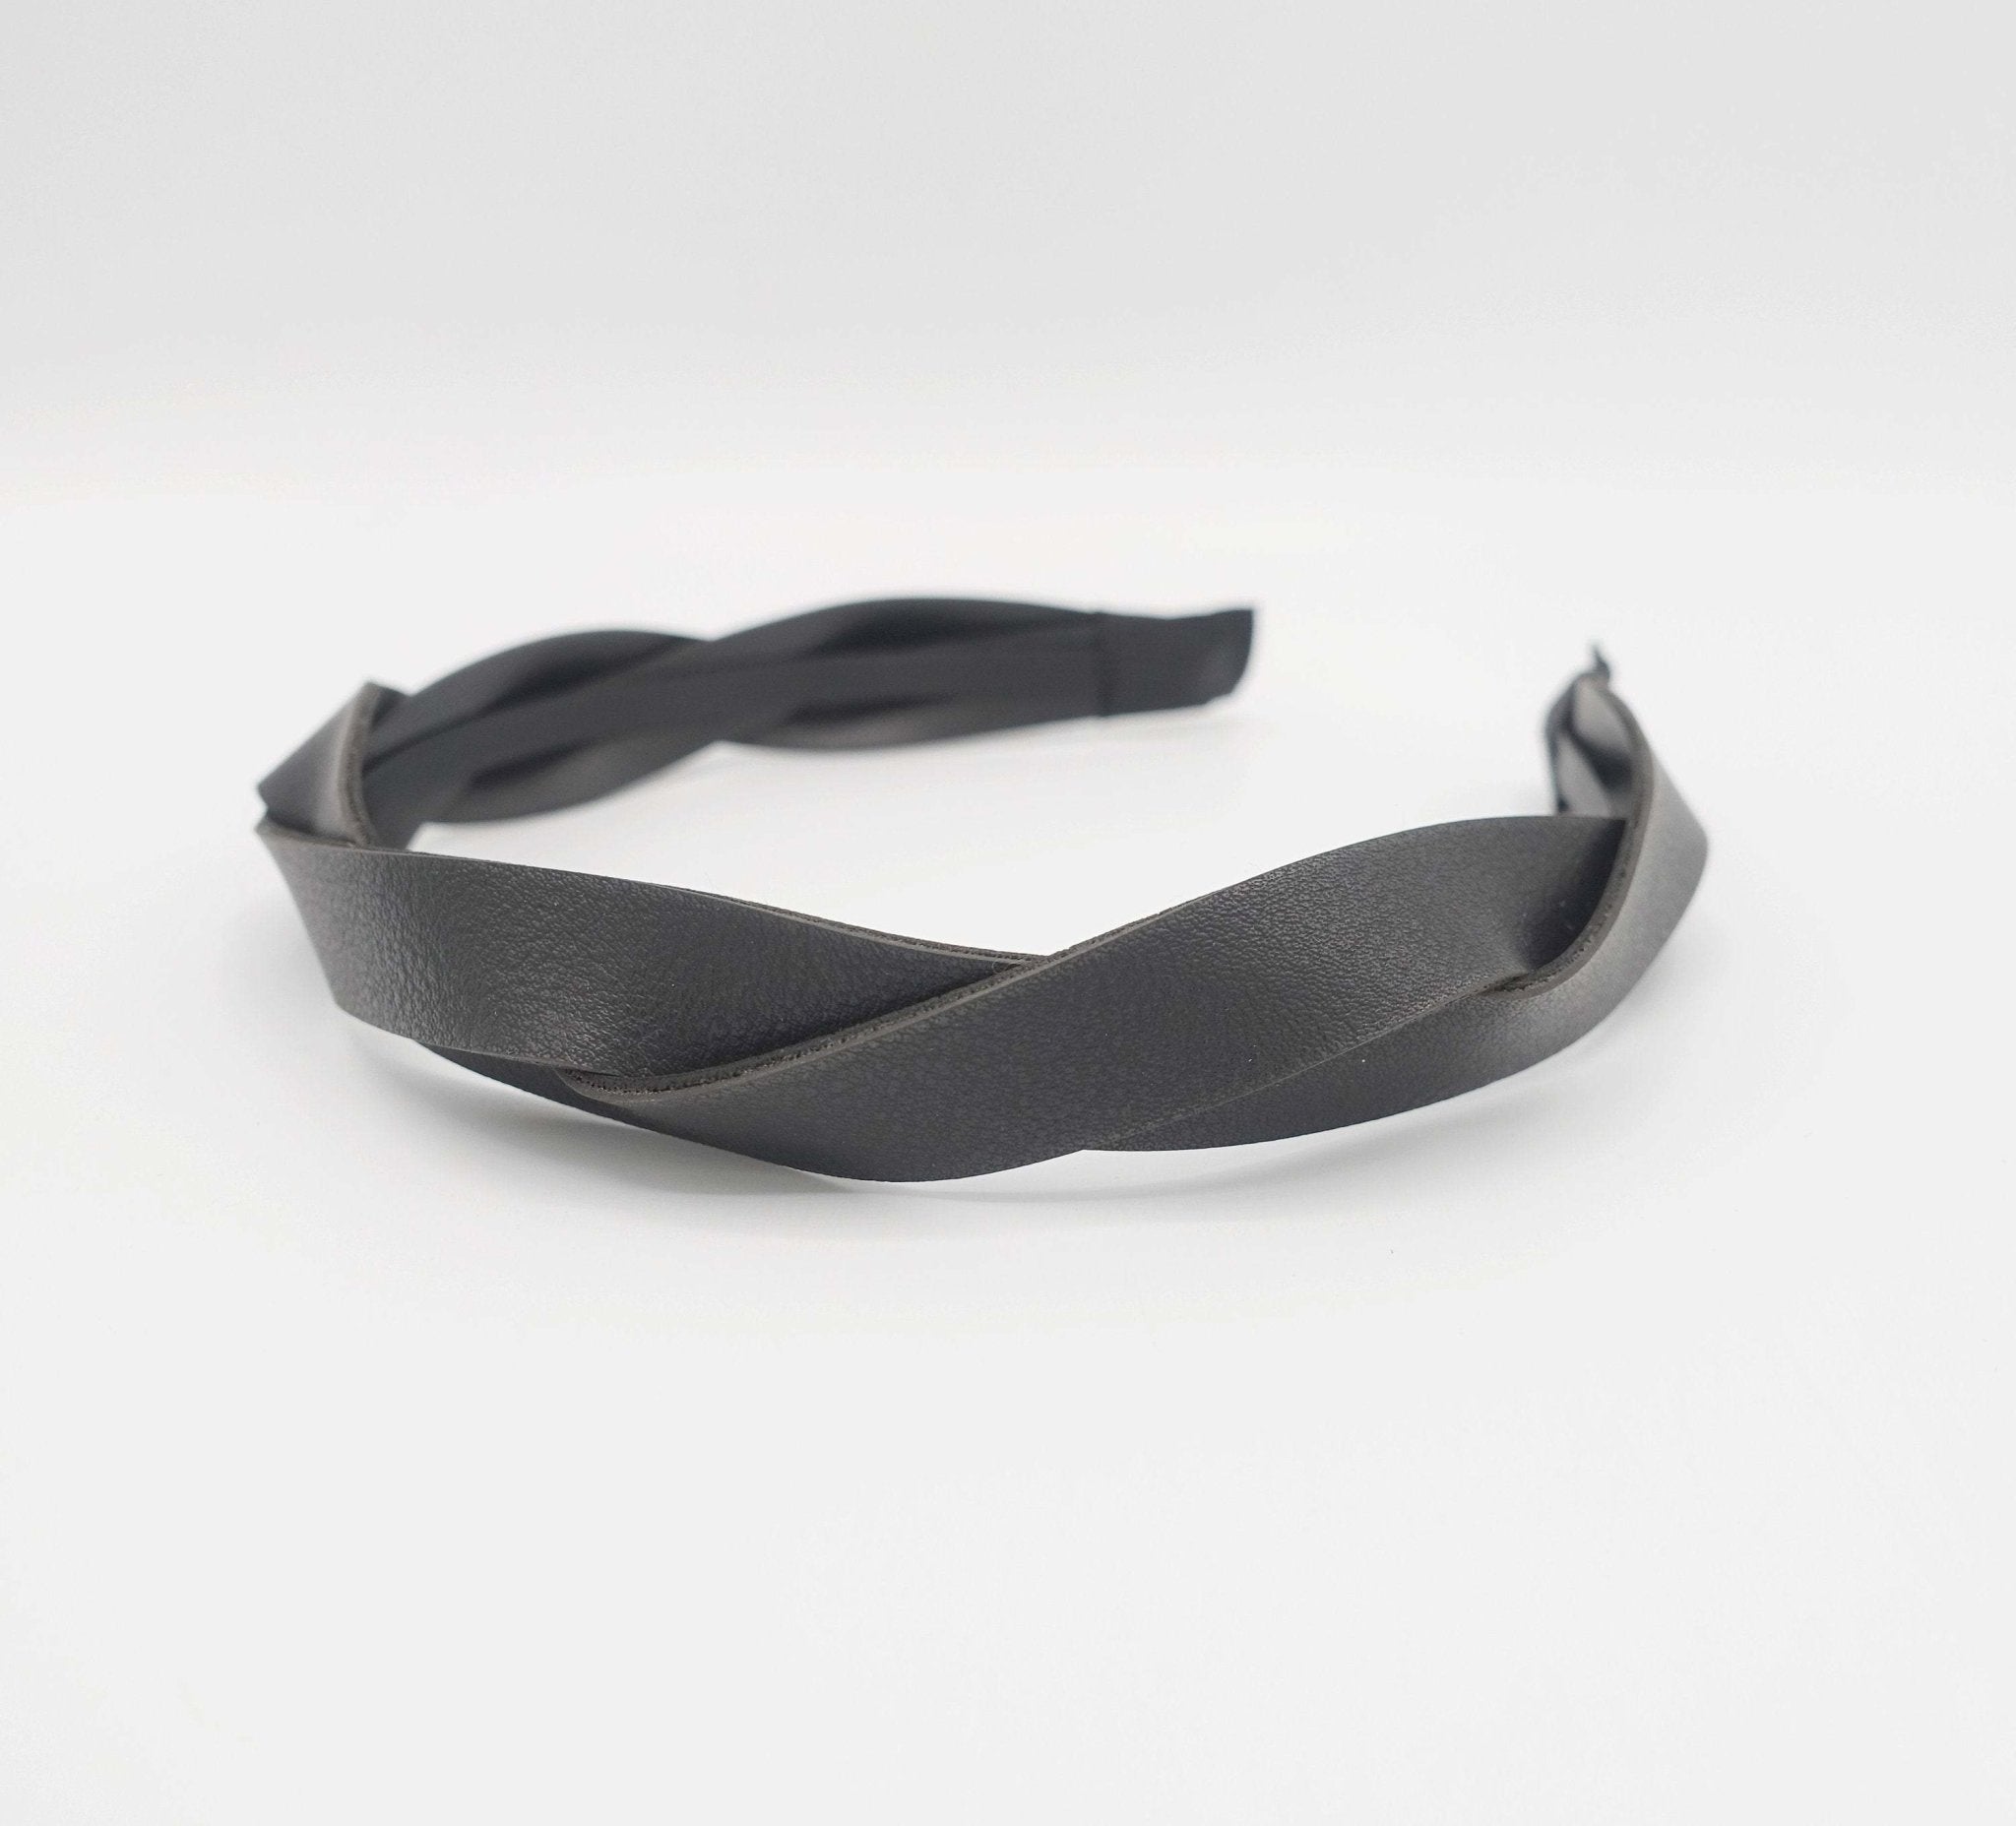 VeryShine hairband/headband Black leather cross headband twist hairband casual hair accessory for women